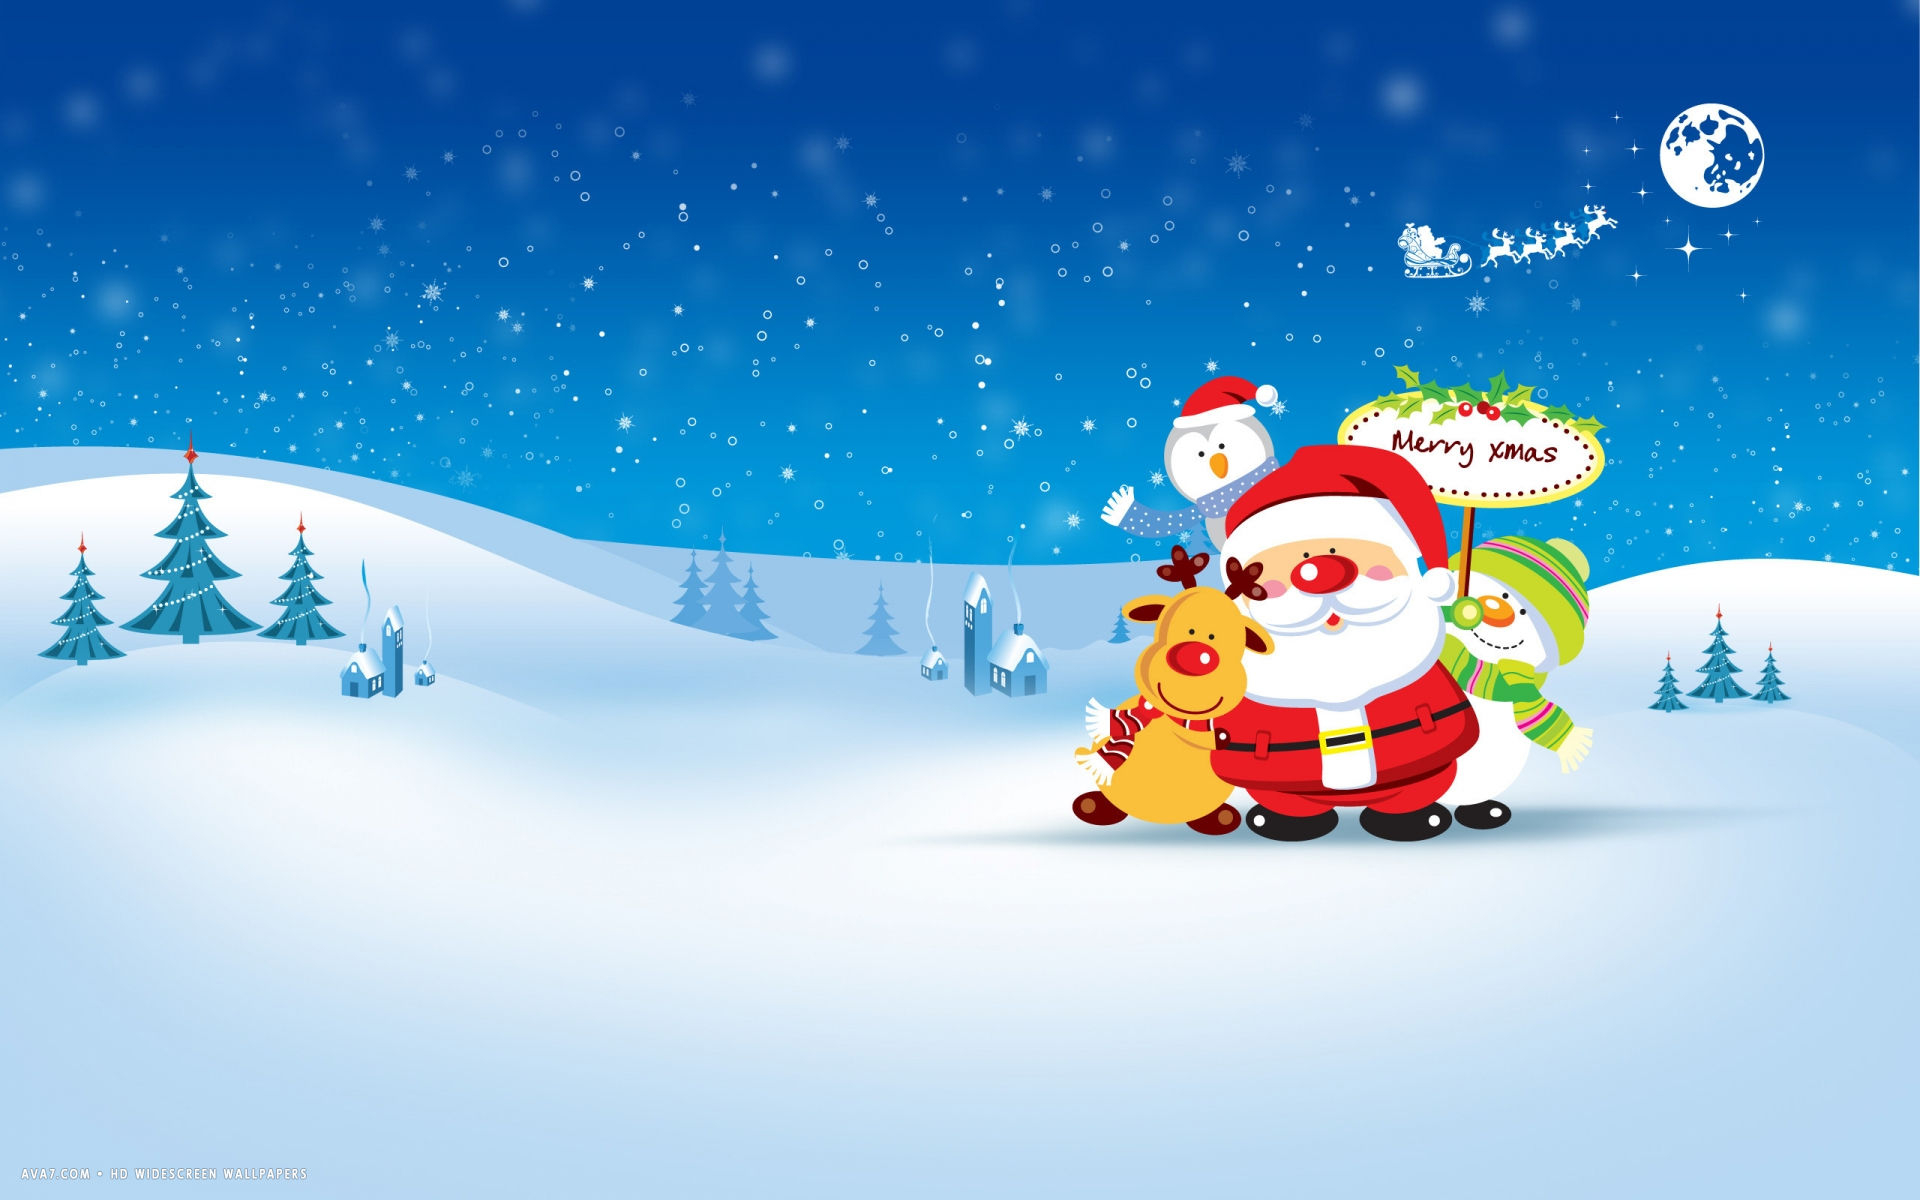 1920x1200 merry xmas christmas landscape vector santa rudolph snowman holiday hd widescreen wallpaper / holidays backgrounds